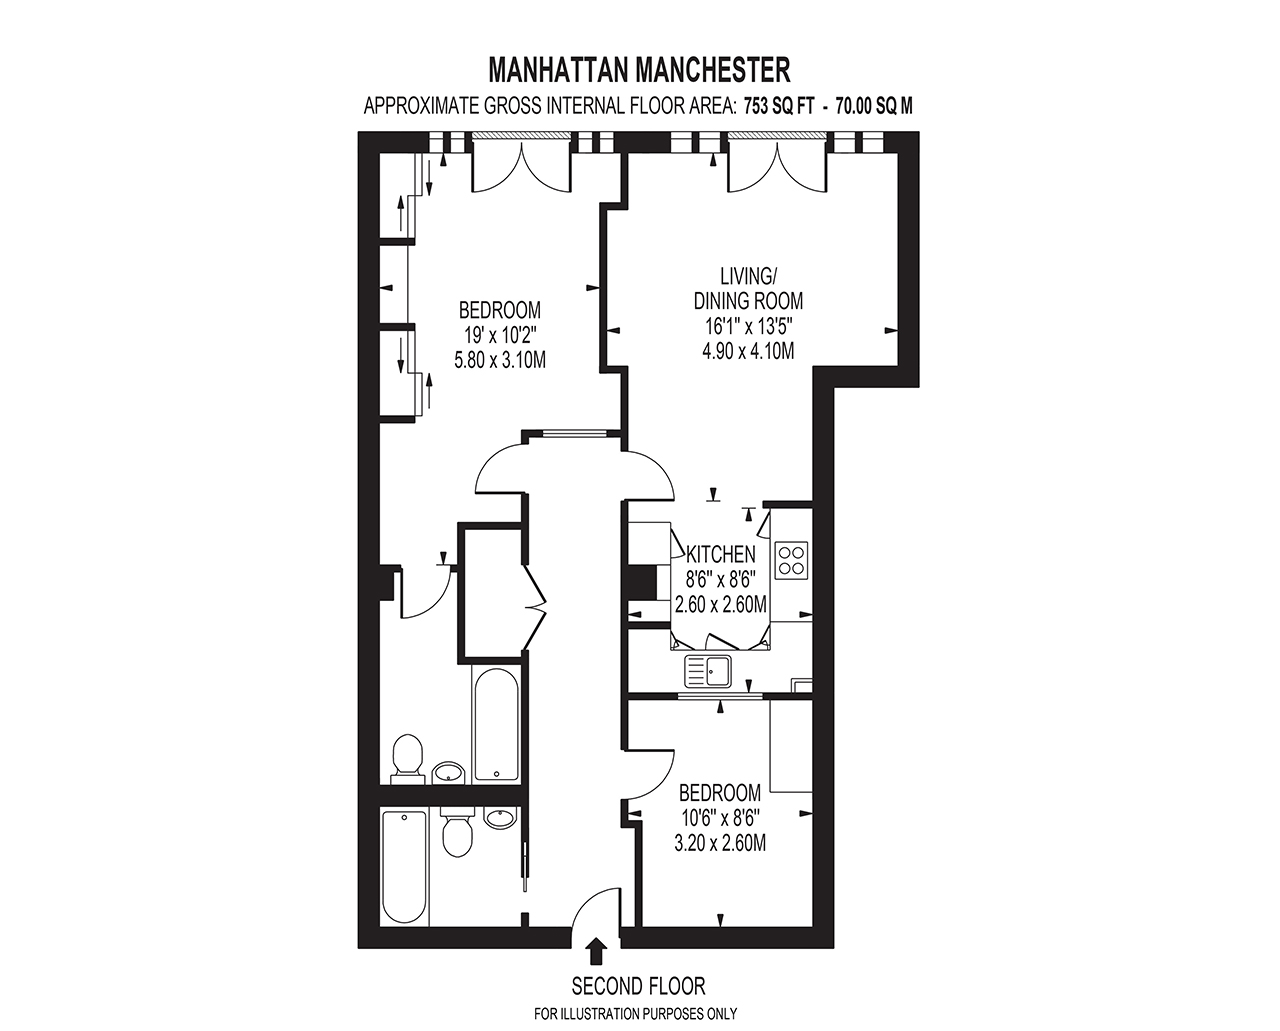 Manhattan Manchester two bedroom apartment floor plan